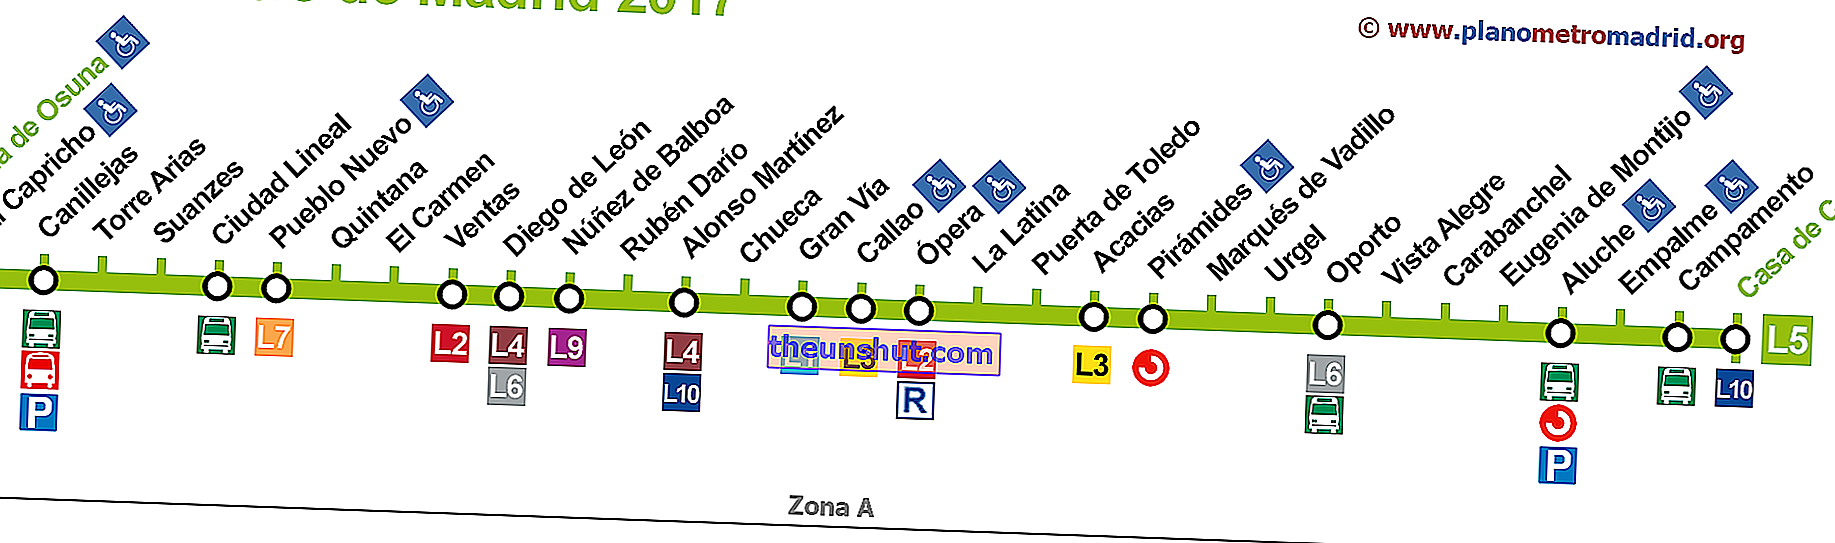 Linia 5 de metrou Madrid